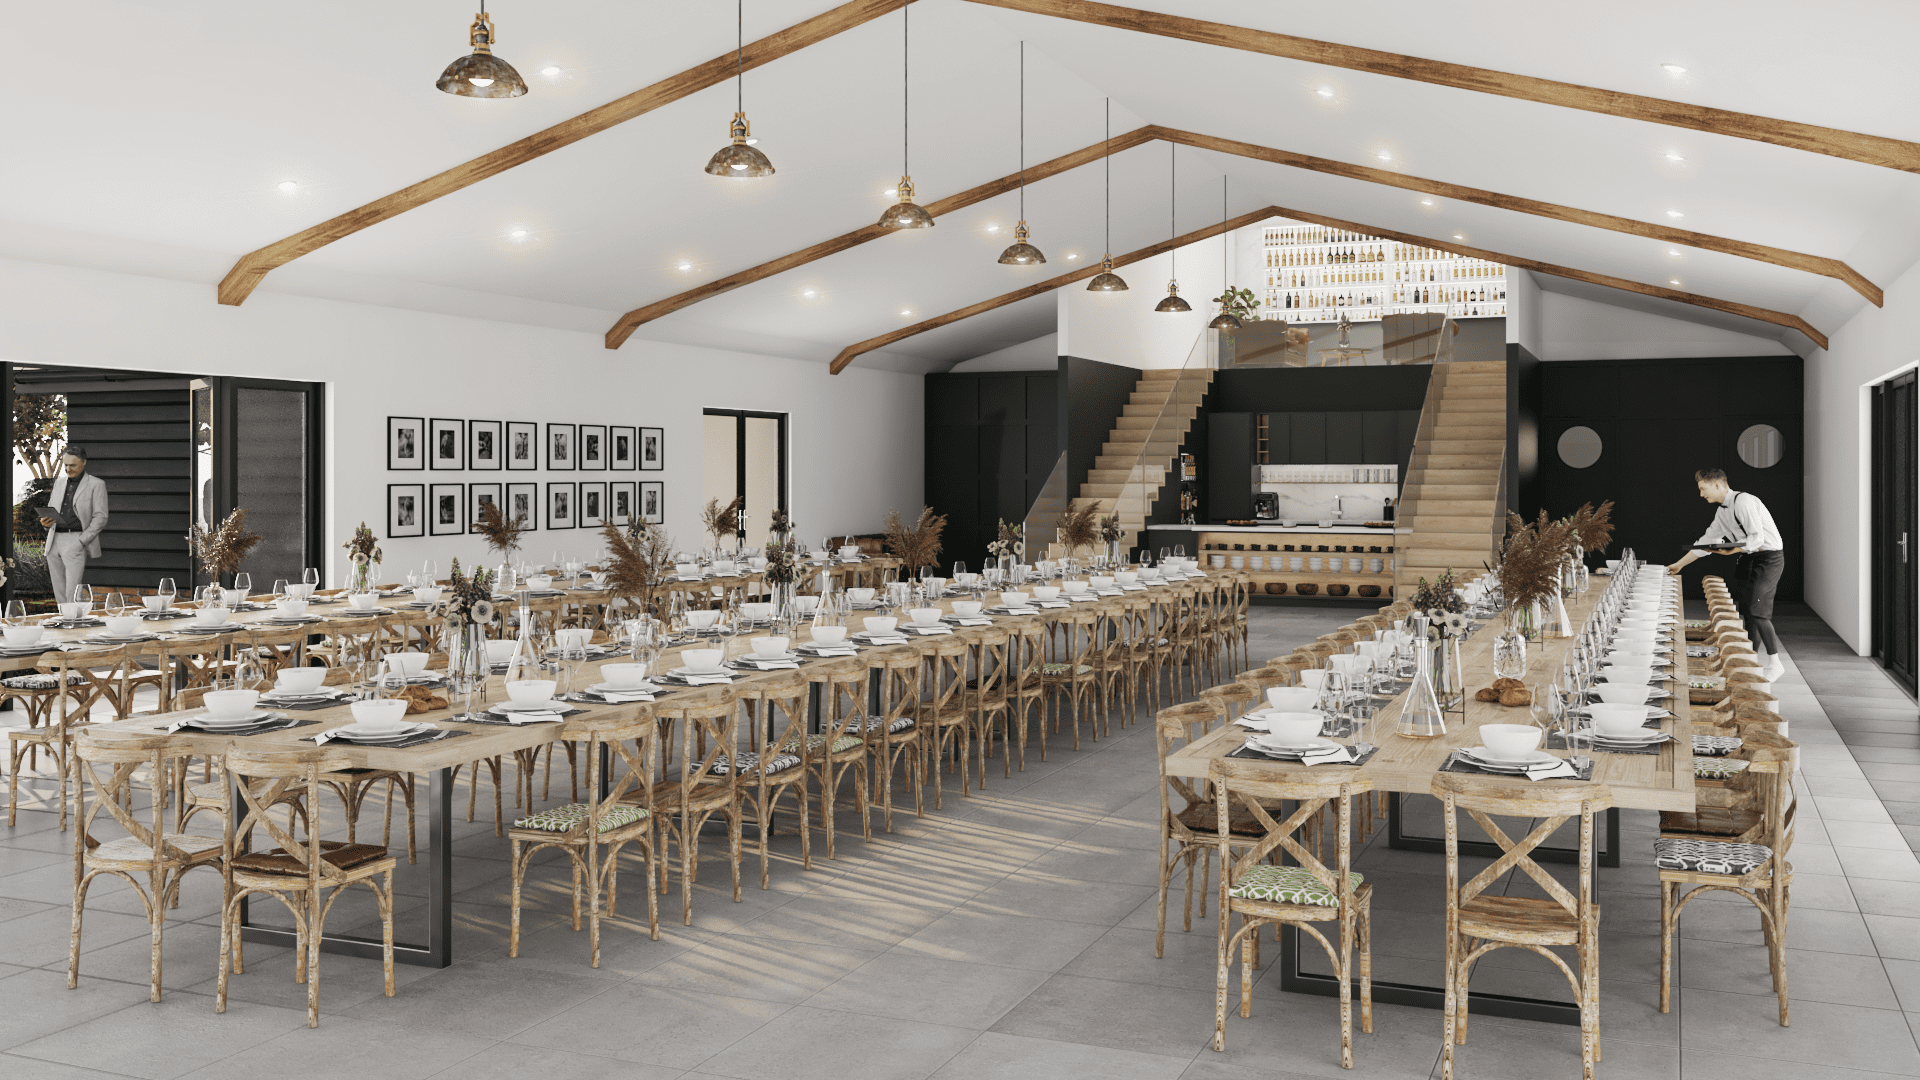 The new banqueting barn